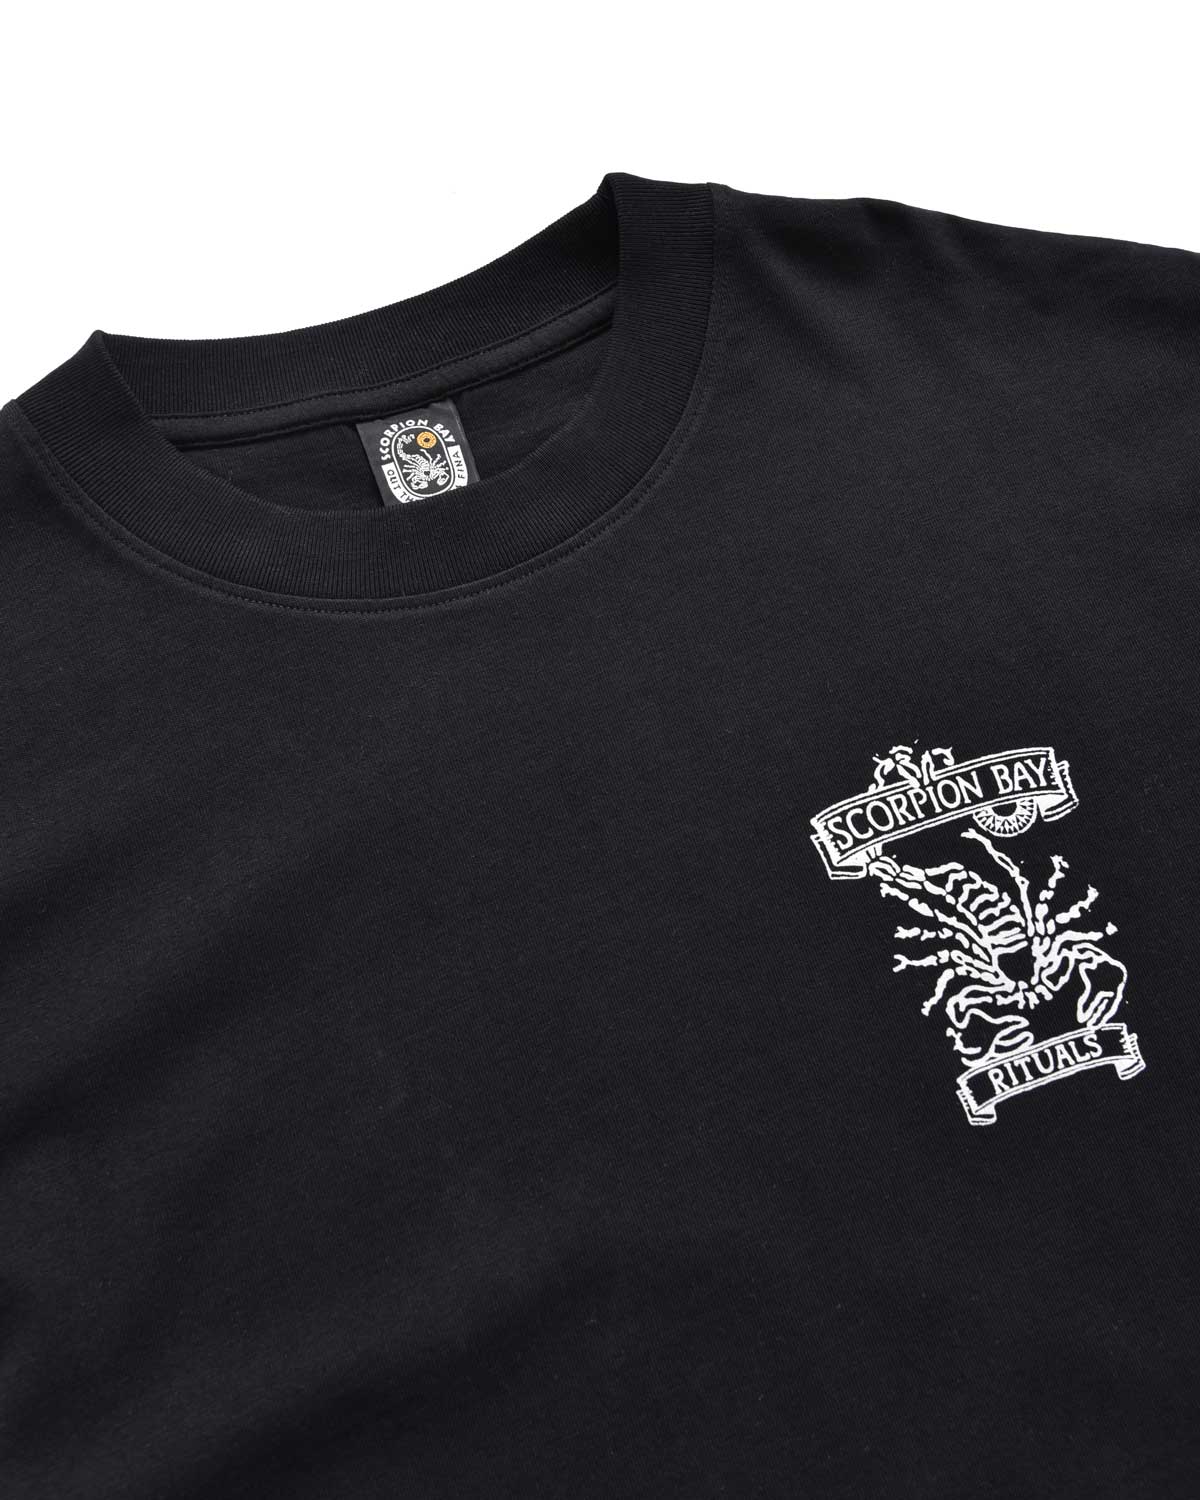 Man | Ritual Og "Thunder Bay" Black T-Shirt In 100% Cotton